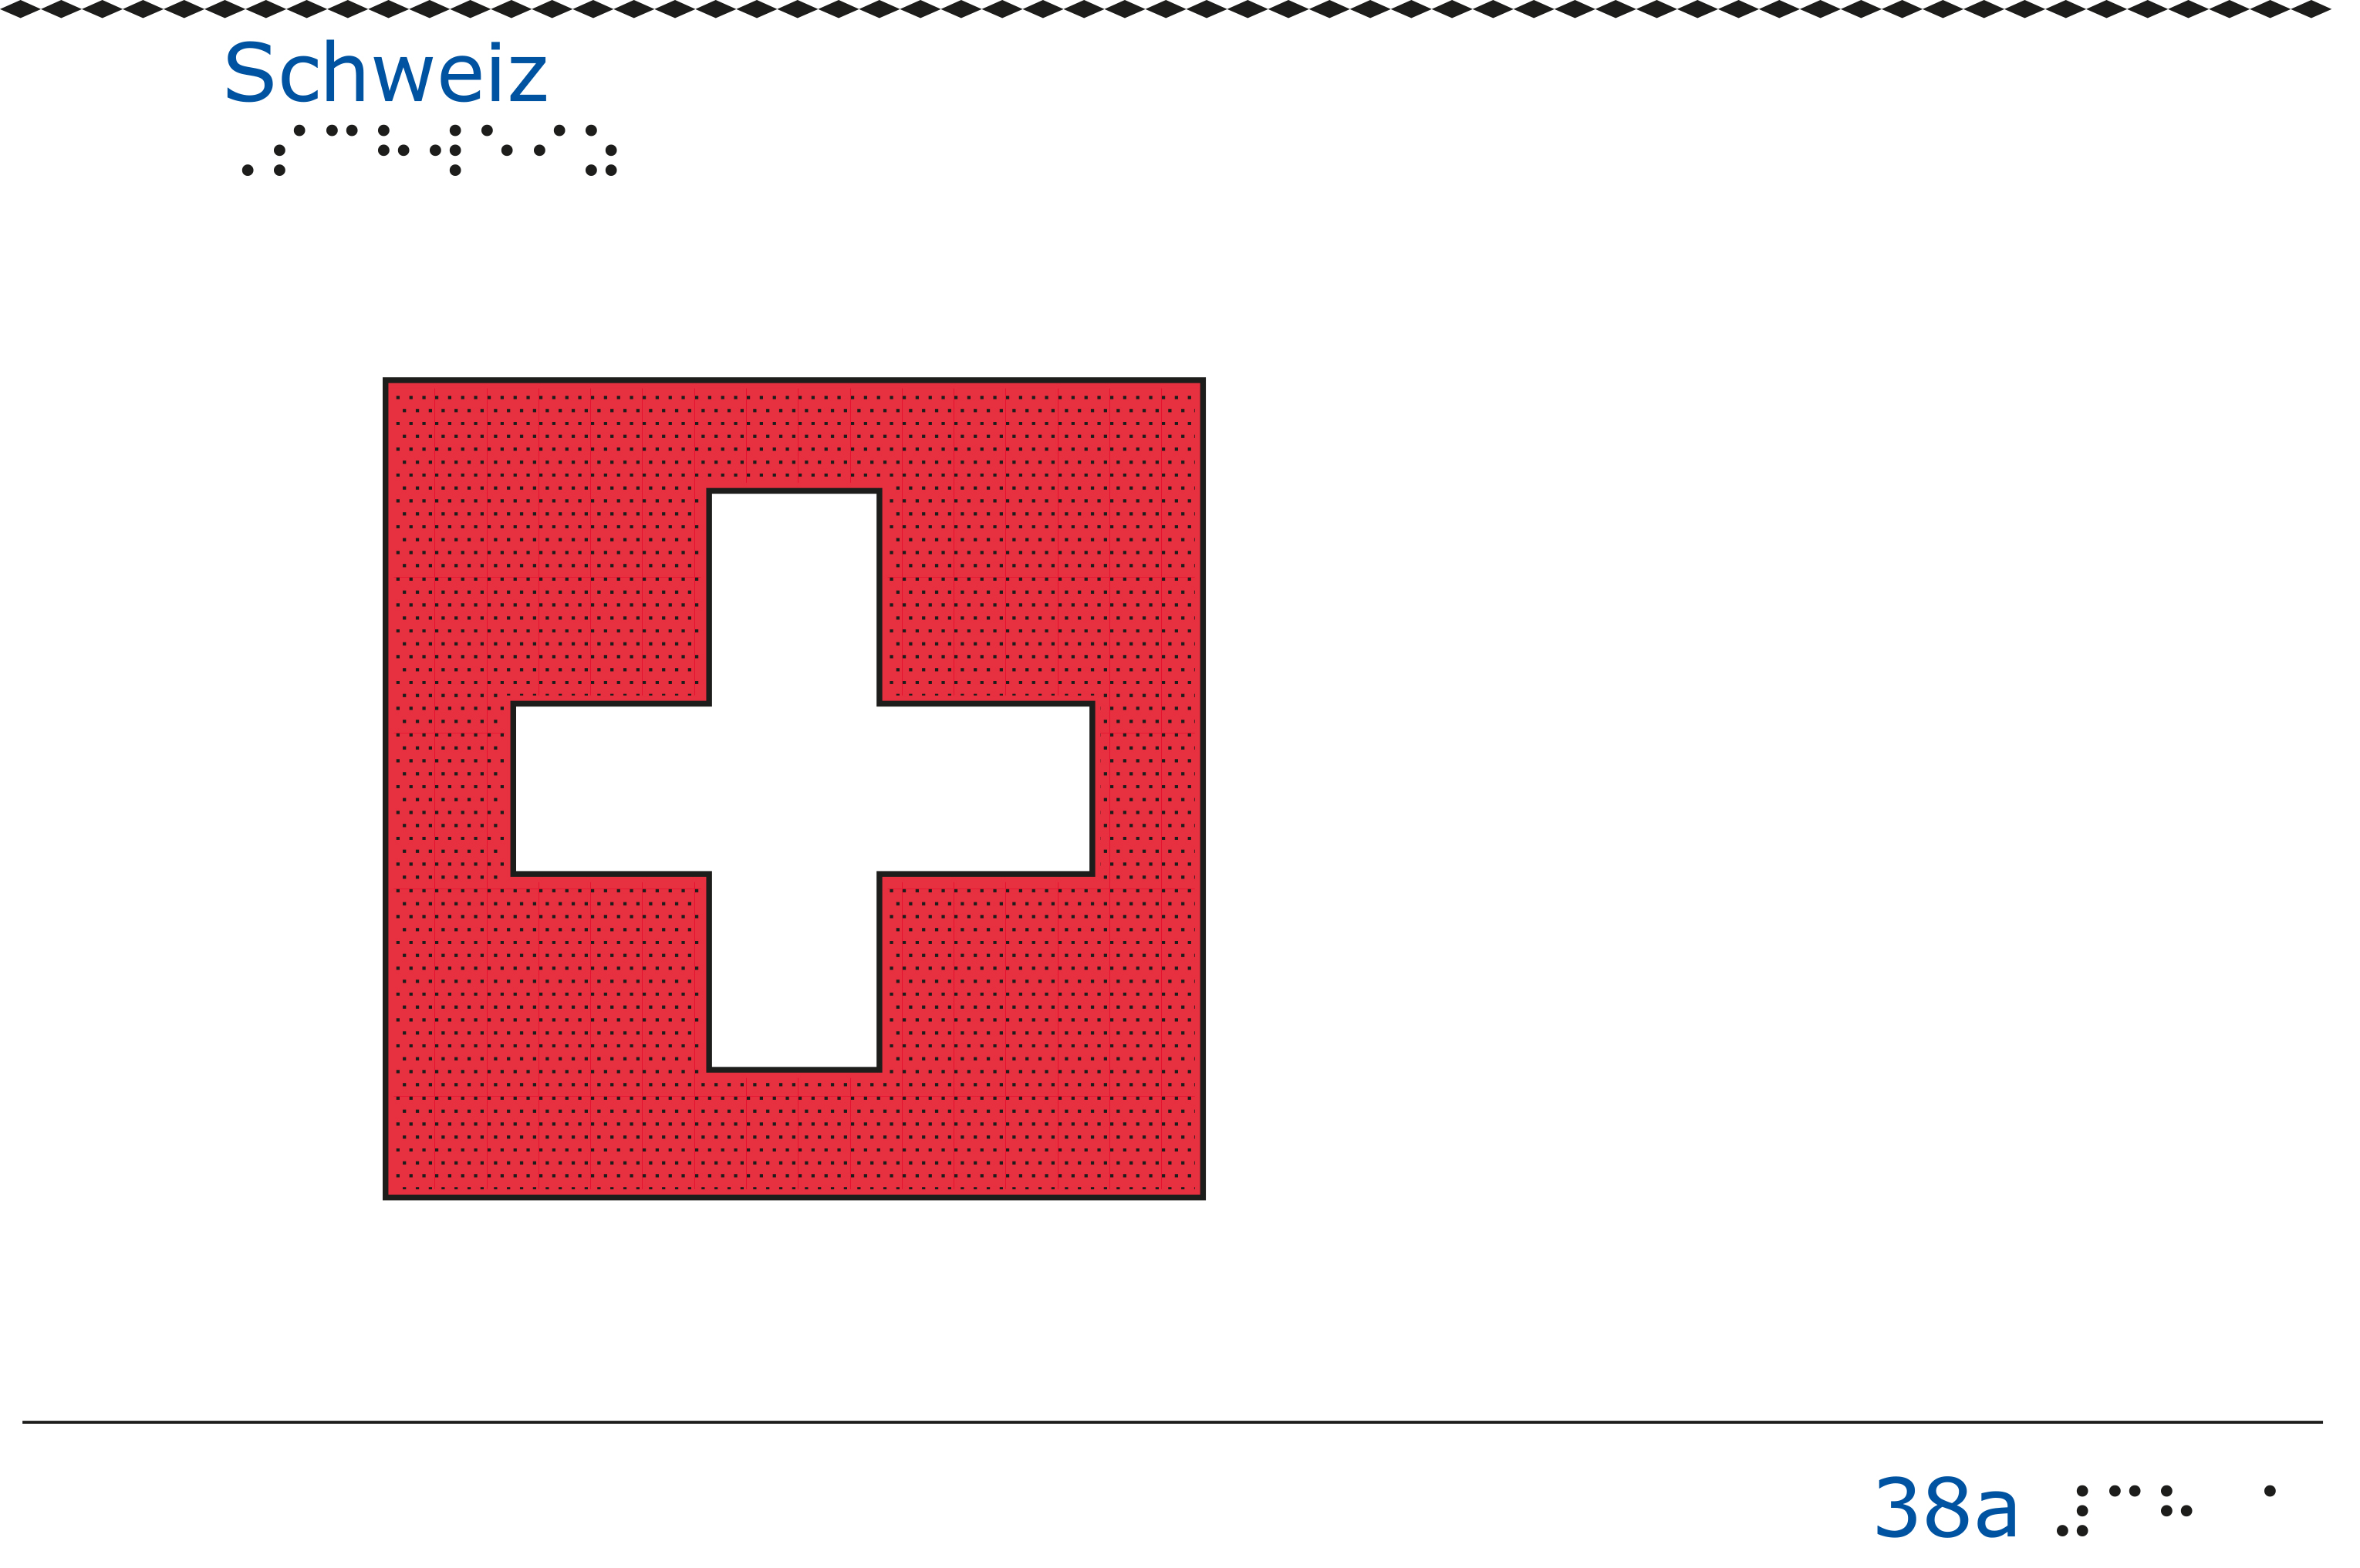 Taktil bild - Schweiz flagga.